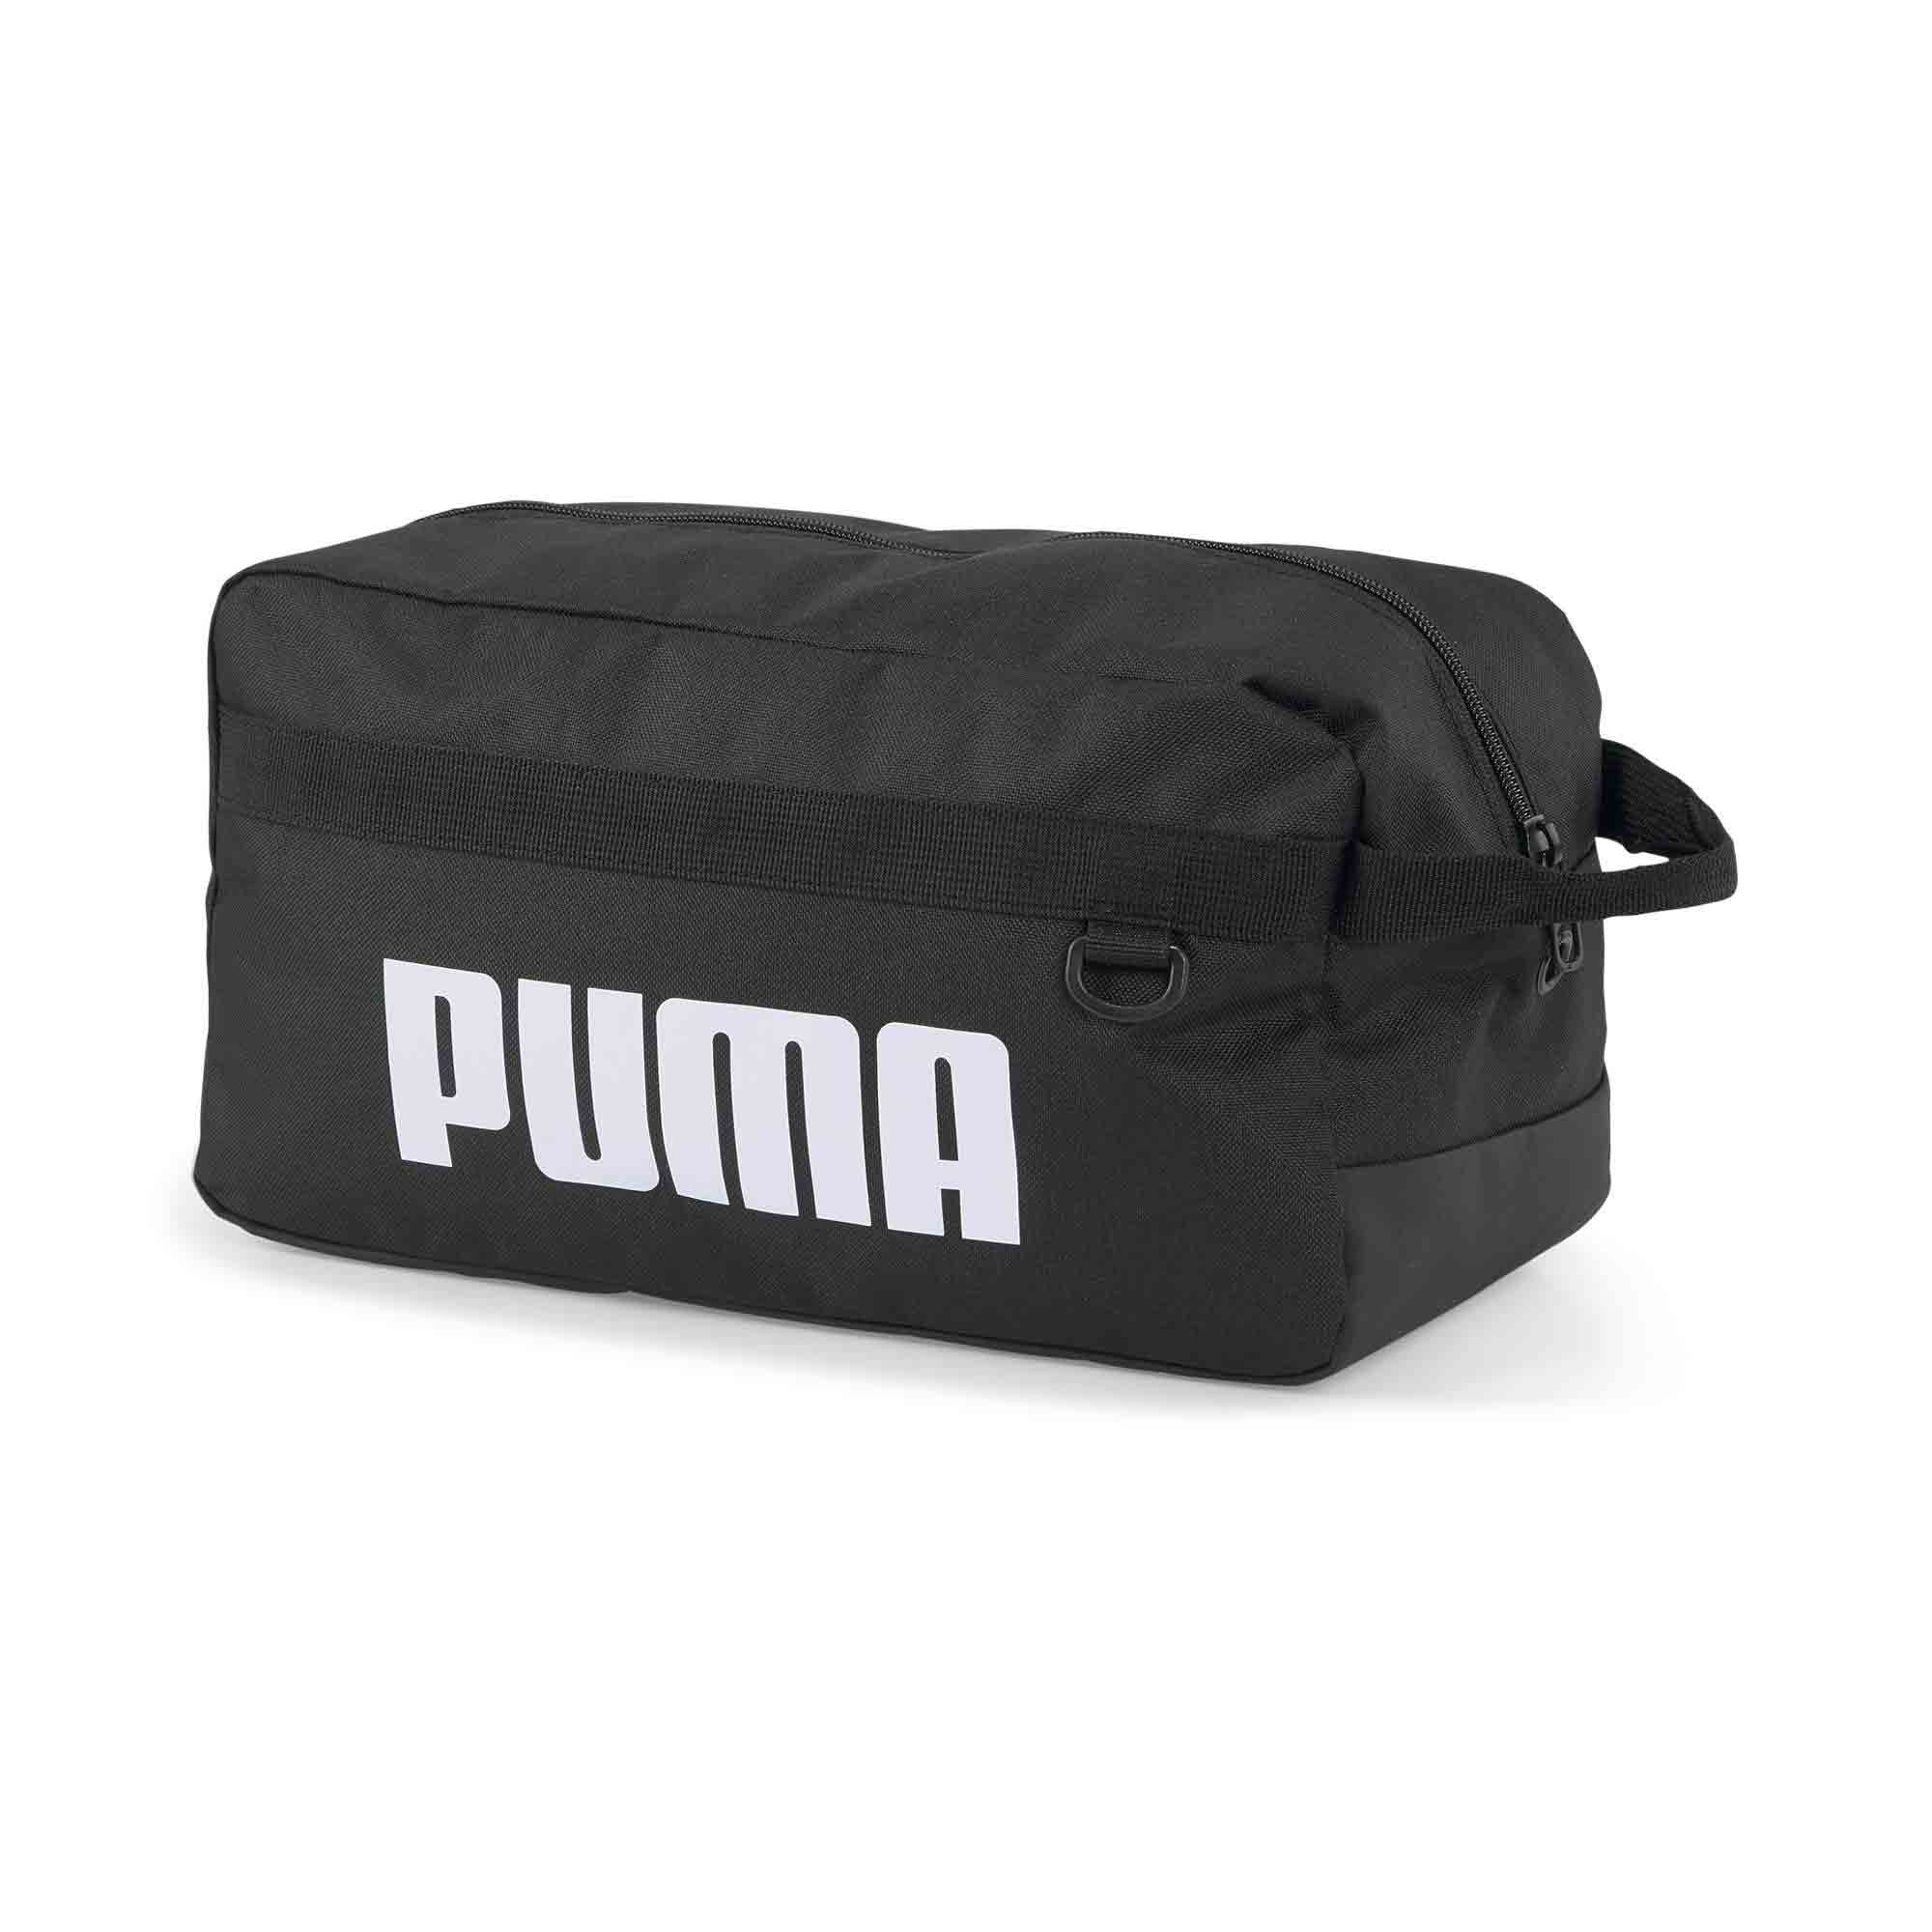 Puma Challenger Shoe Bag Black 9L